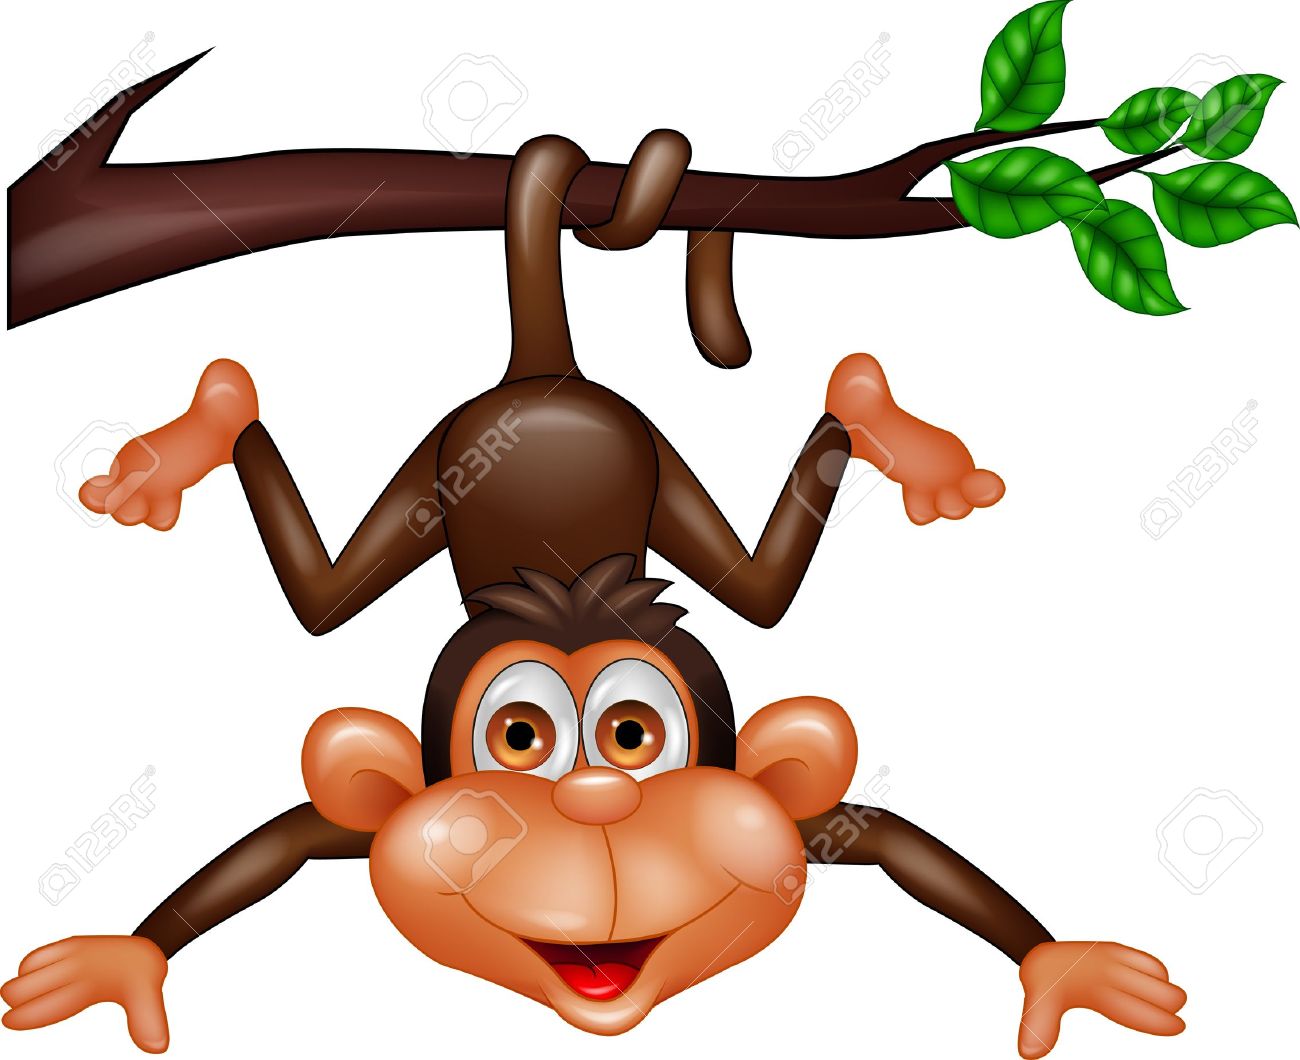 hanging-monkey-drawing-at-getdrawings-free-download